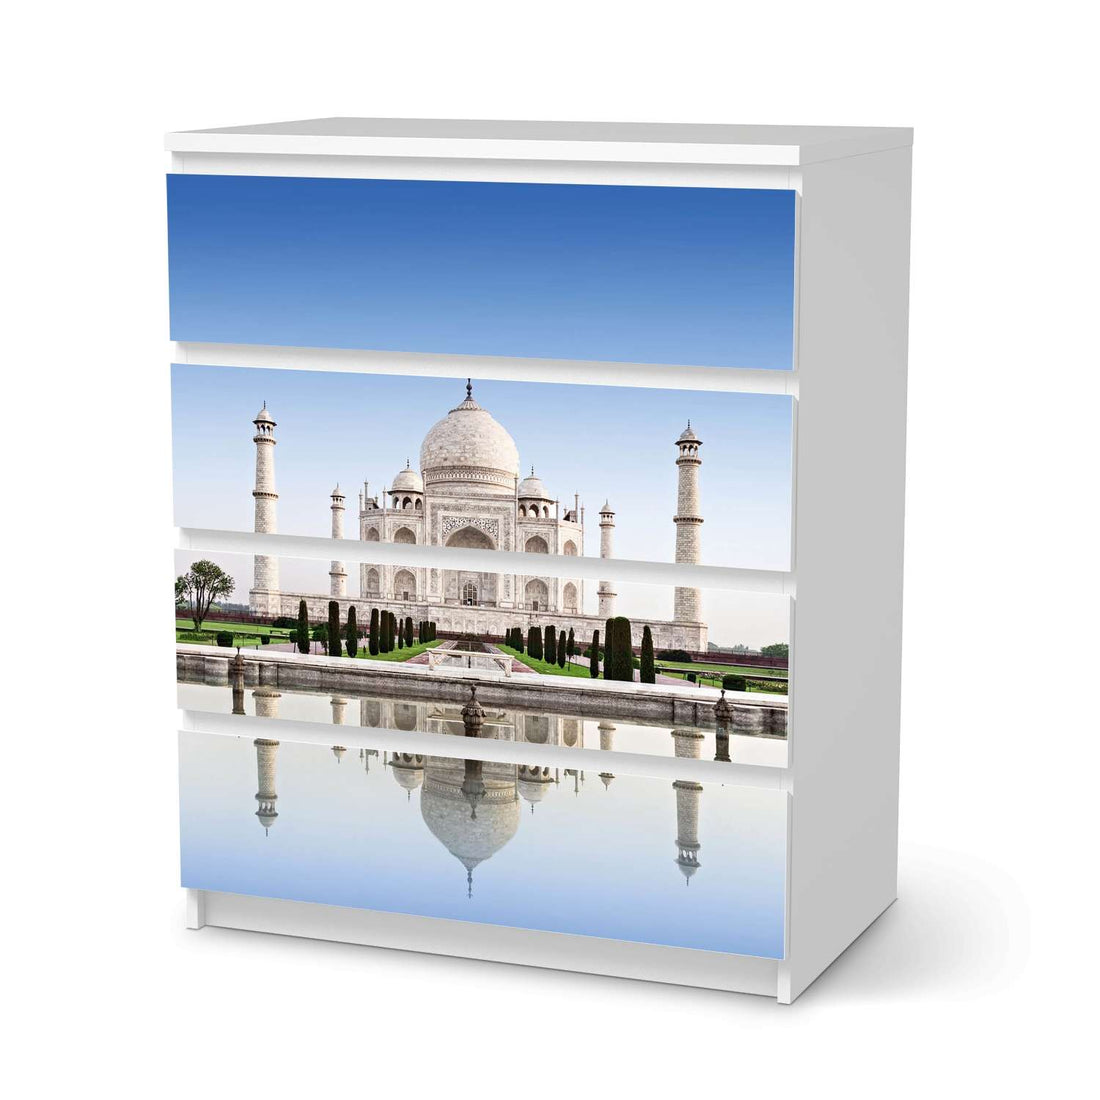 Folie für Möbel Taj Mahal - IKEA Malm Kommode 4 Schubladen  - weiss